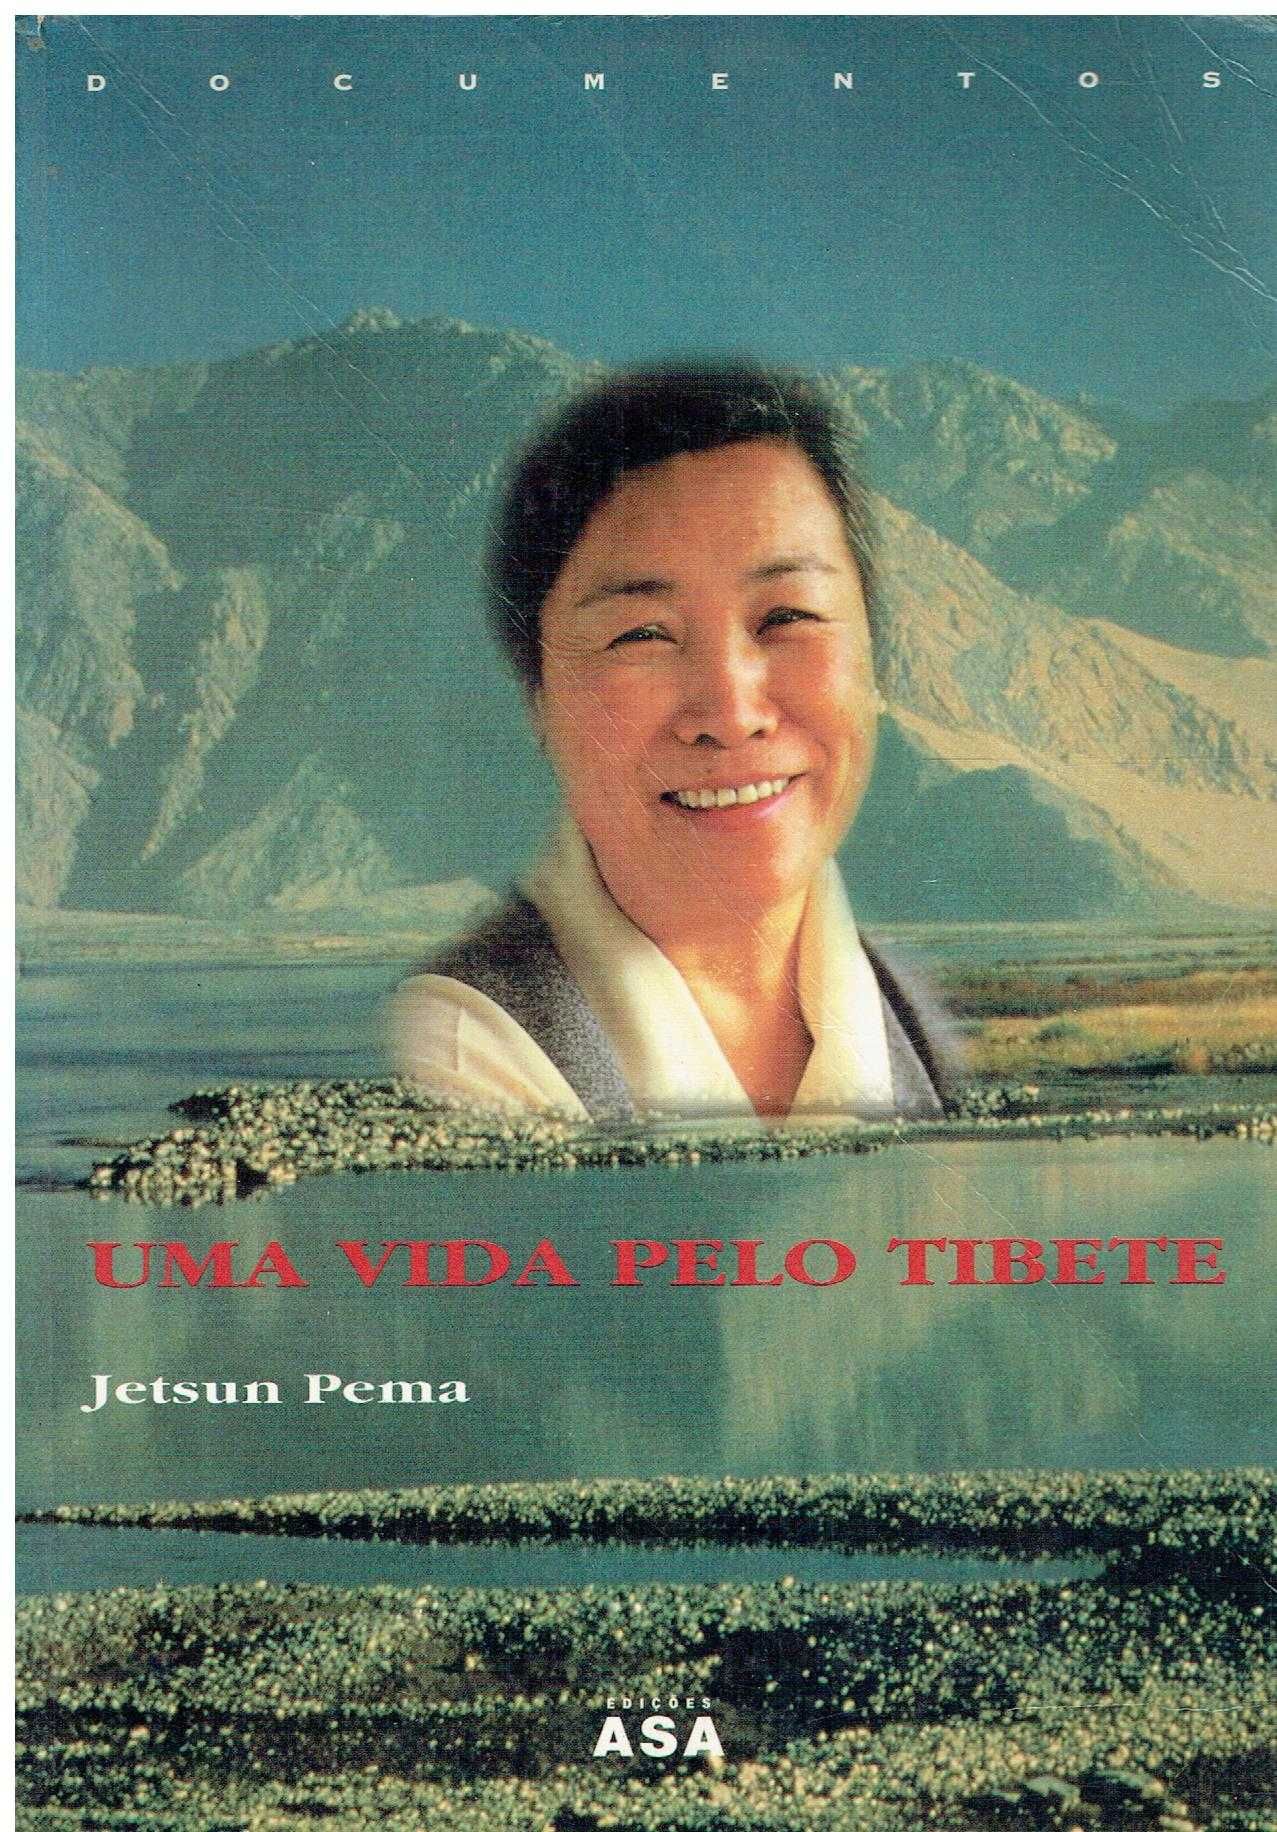 11660

Uma Vida Pelo Tibete
de Jetsun Pema